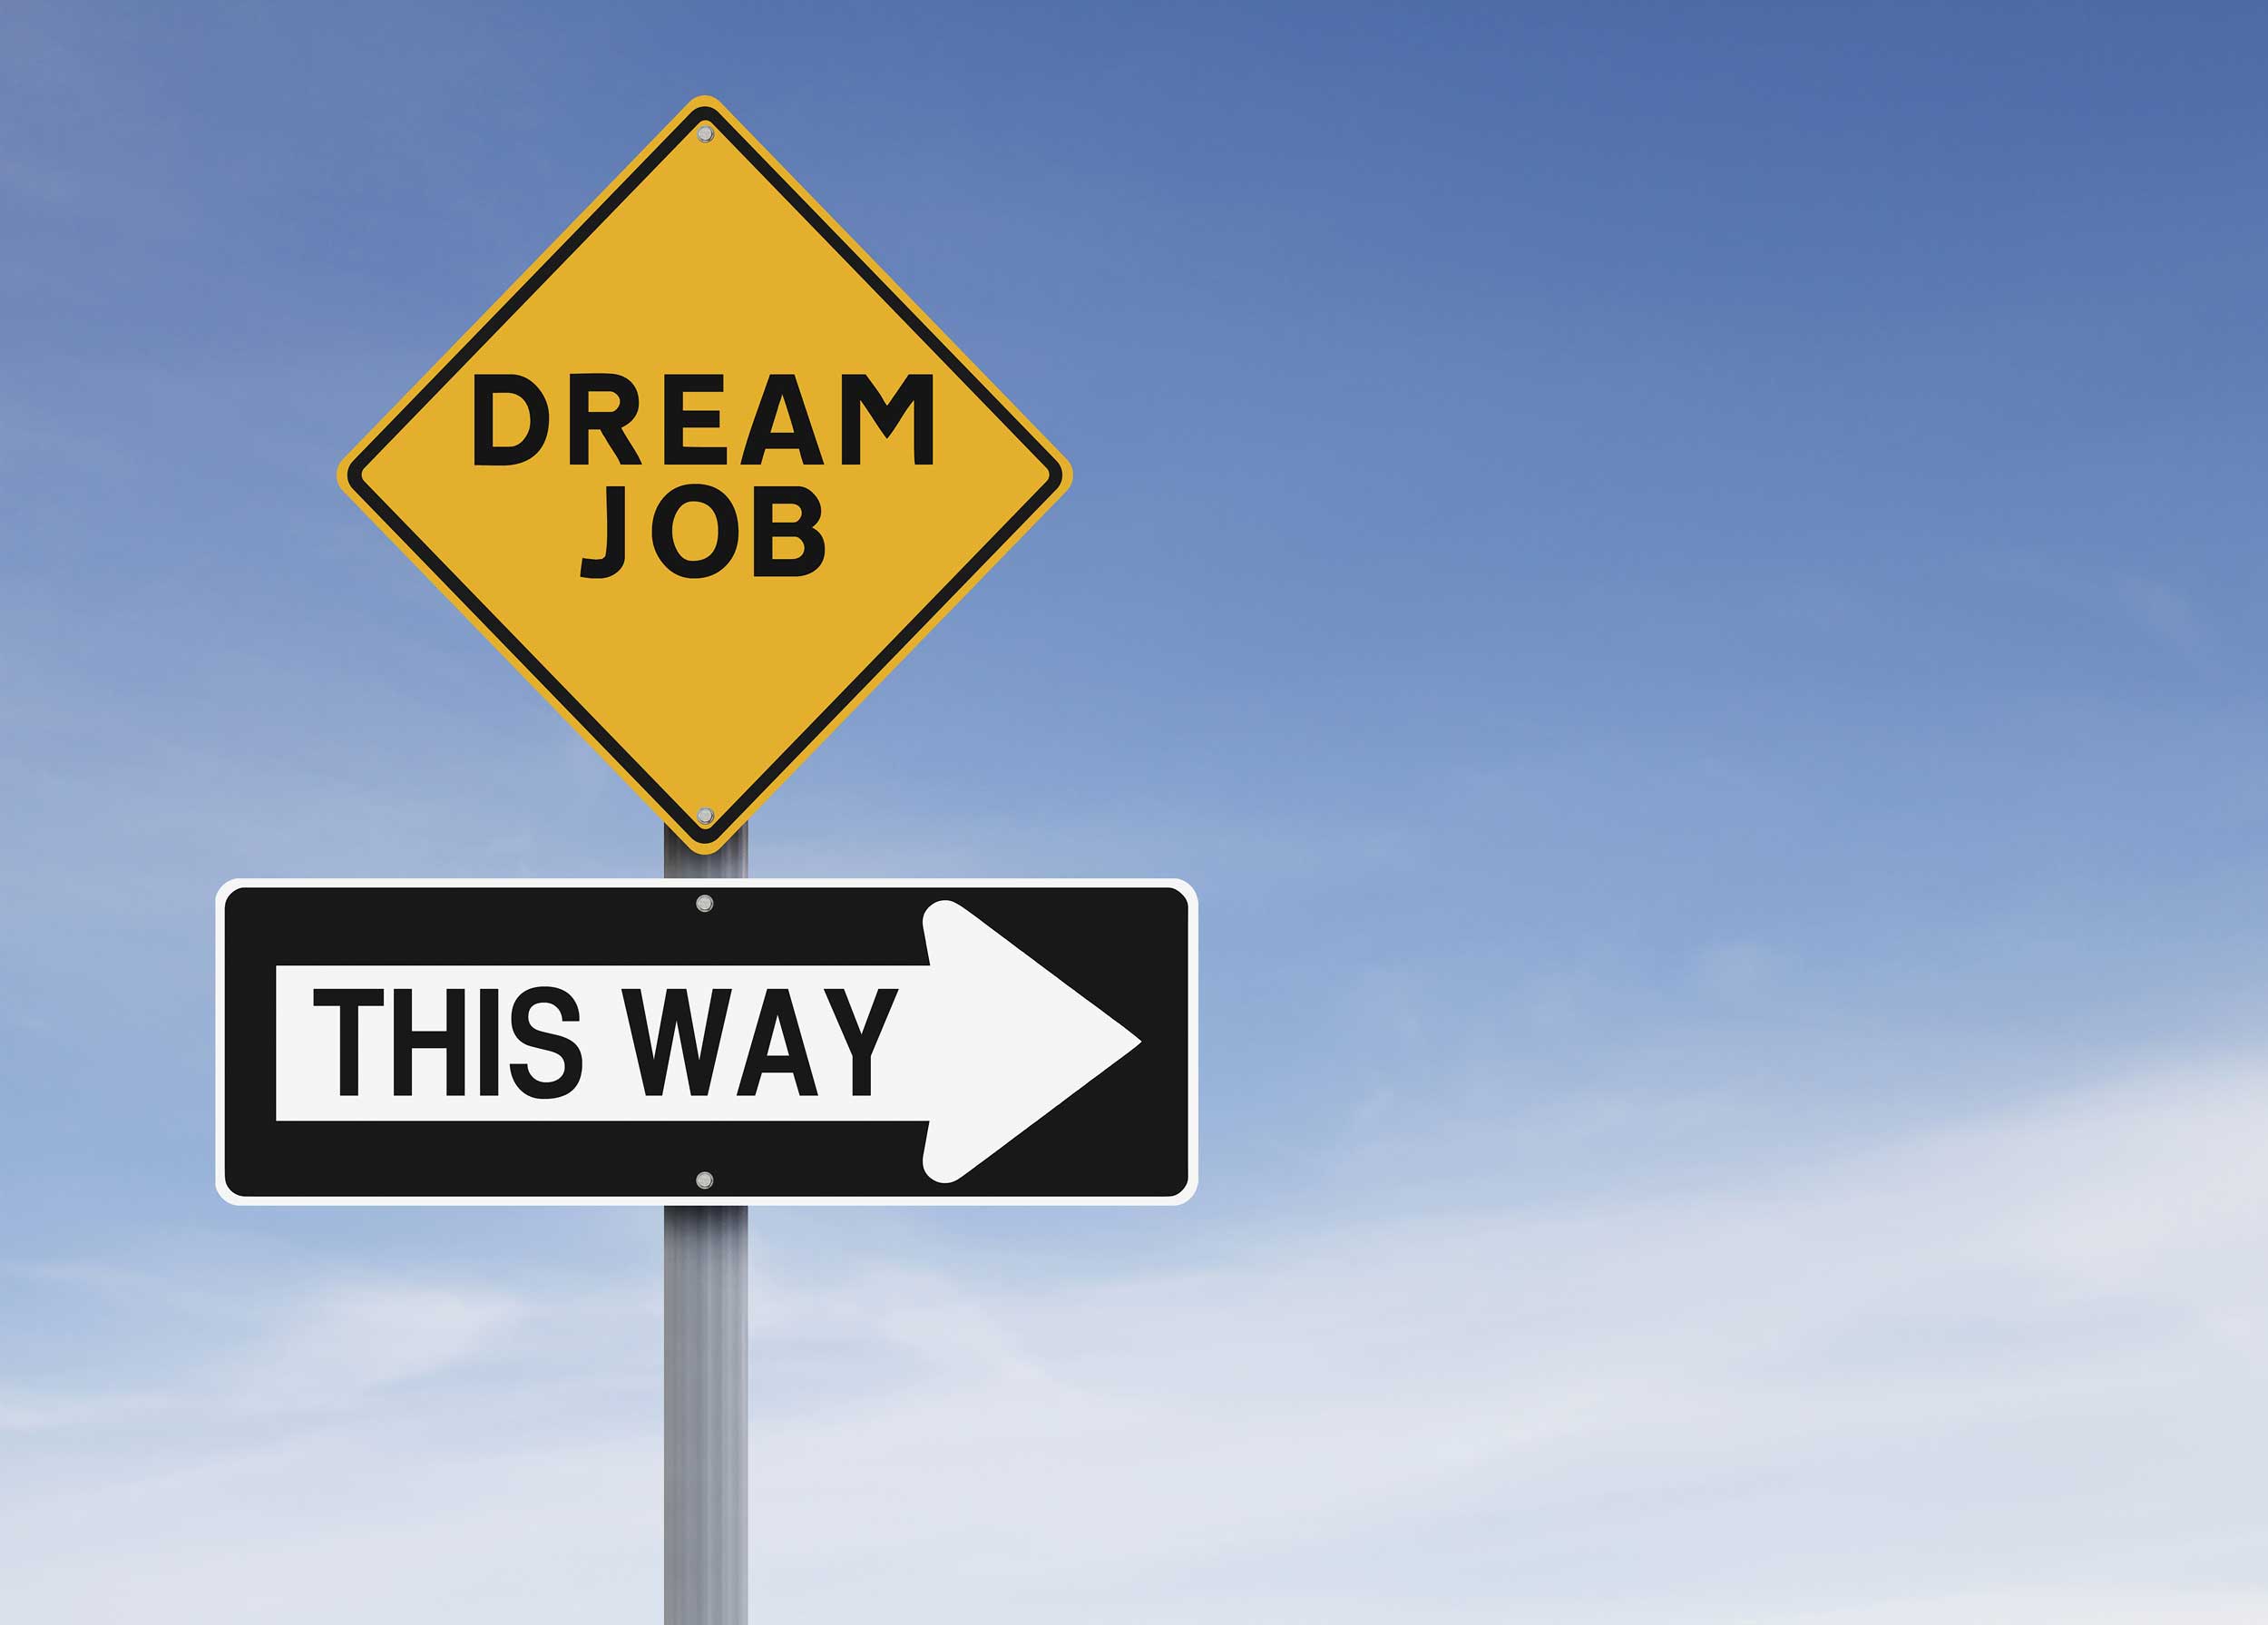 "Dream Job: This Way" sign